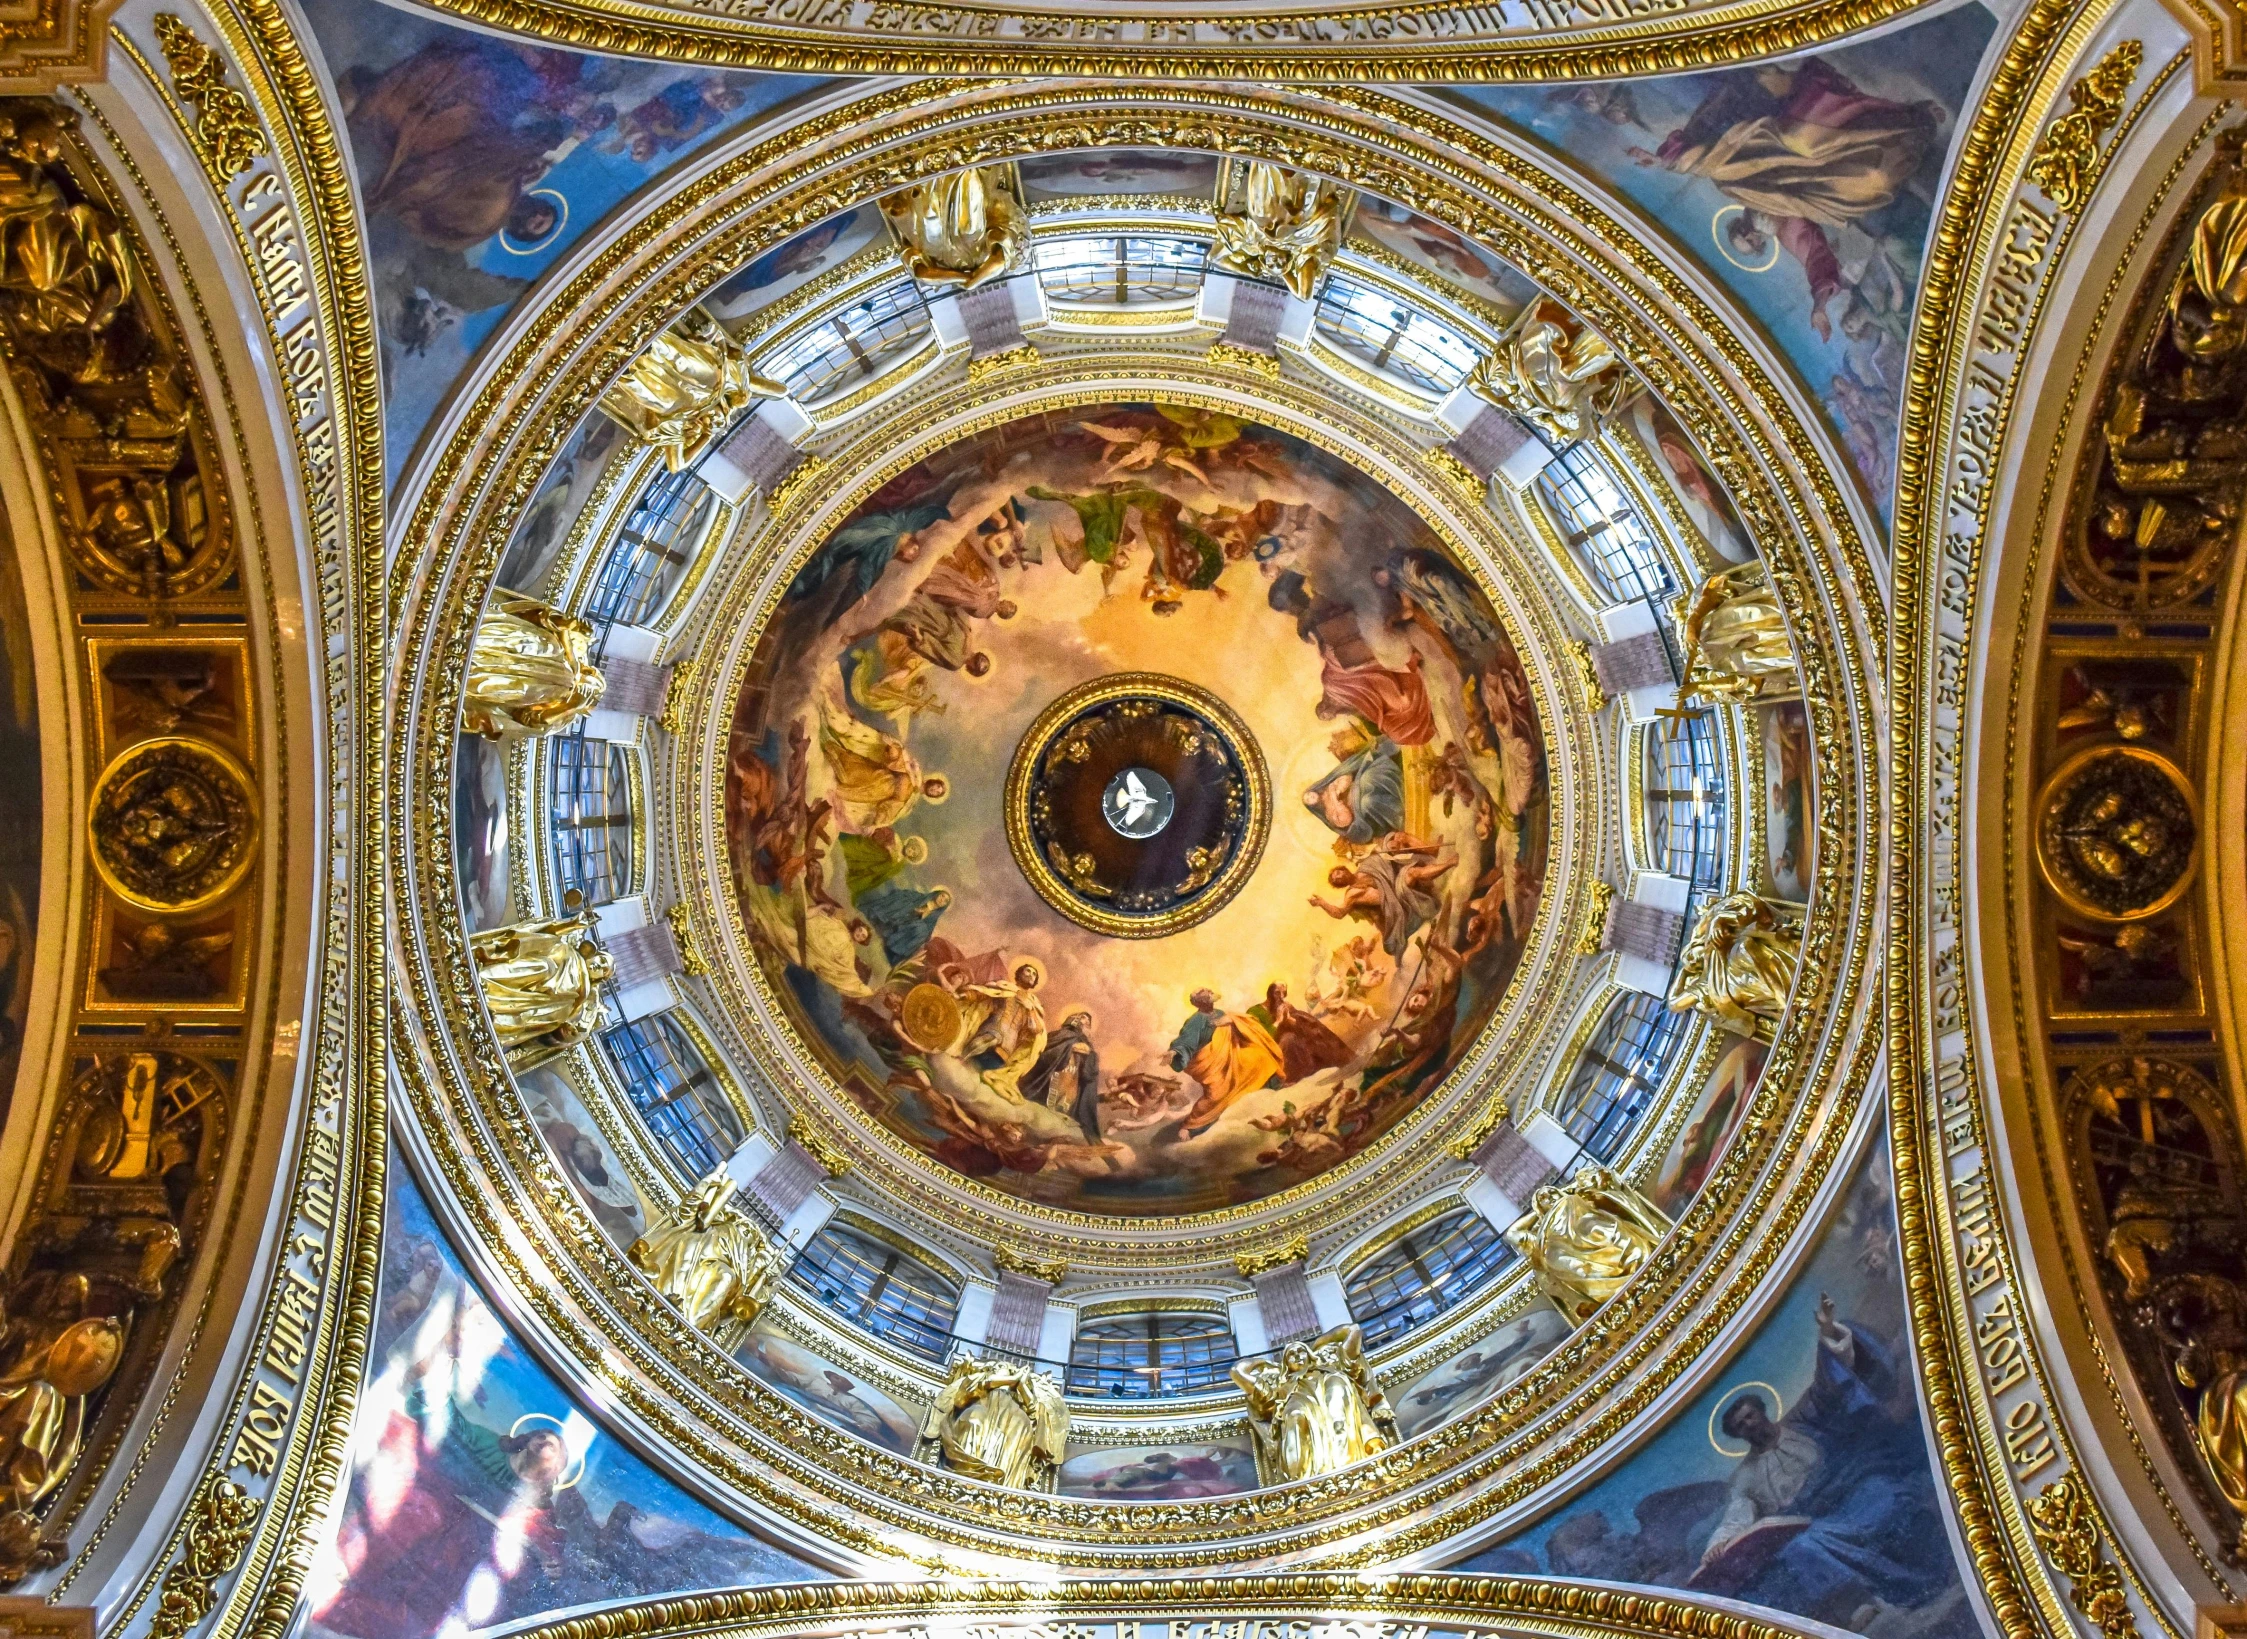 the ceiling of the dome of the dome of the dome of the dome of the dome of the dome of the dome of the dome of the, an album cover, inspired by Károly Markó the Elder, shutterstock, square, petite, faberge, holy halo